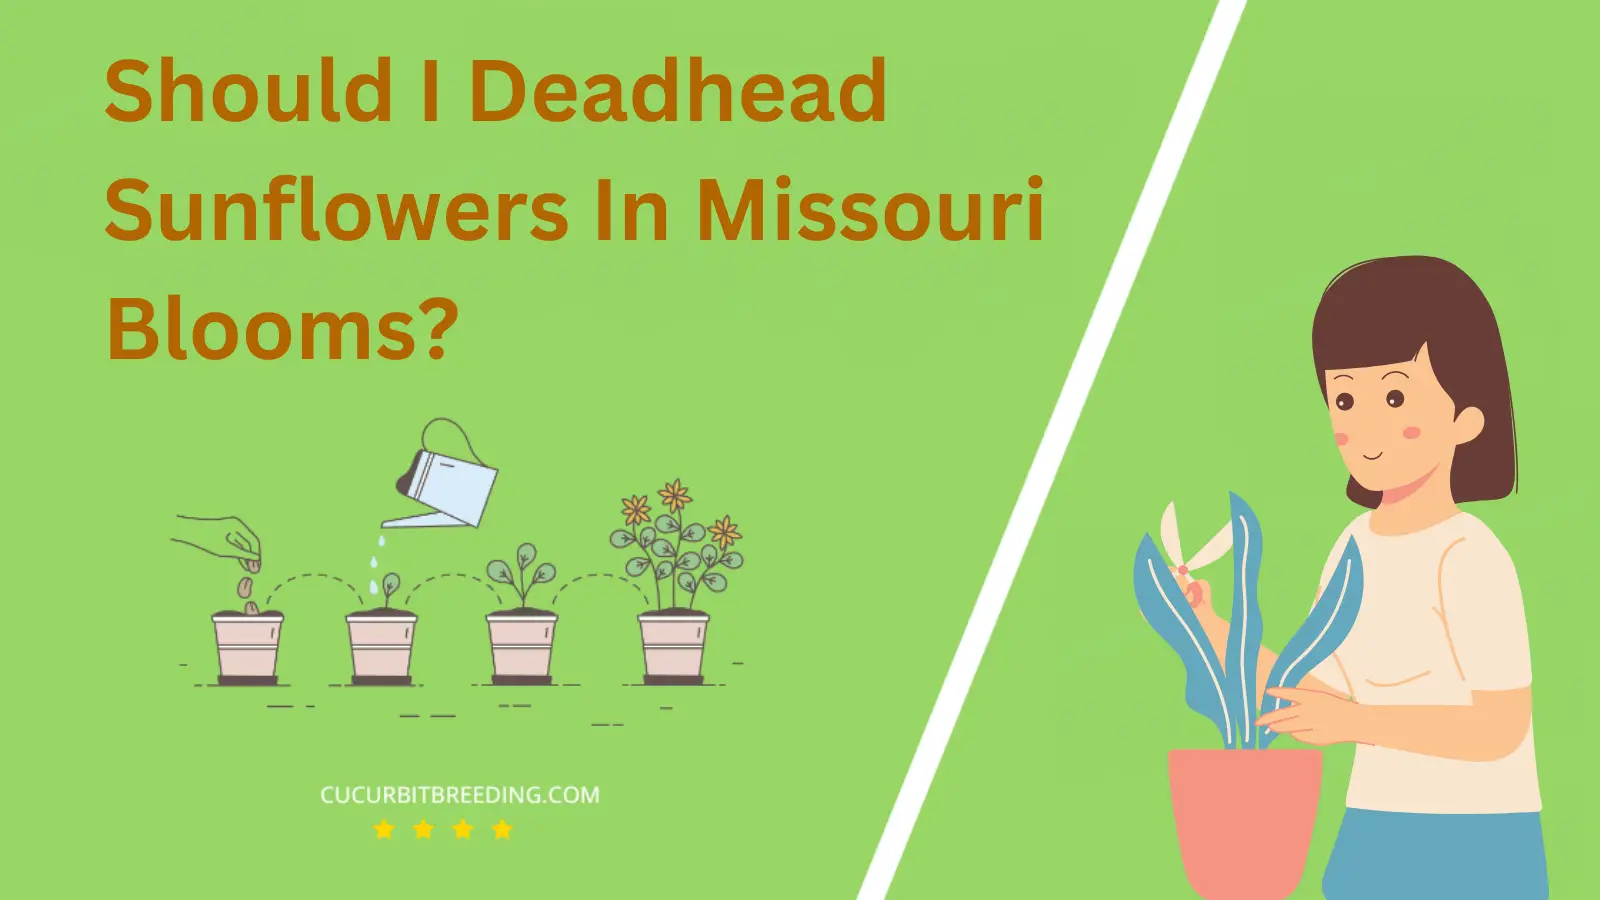 Should I Deadhead Sunflowers In Missouri Blooms?